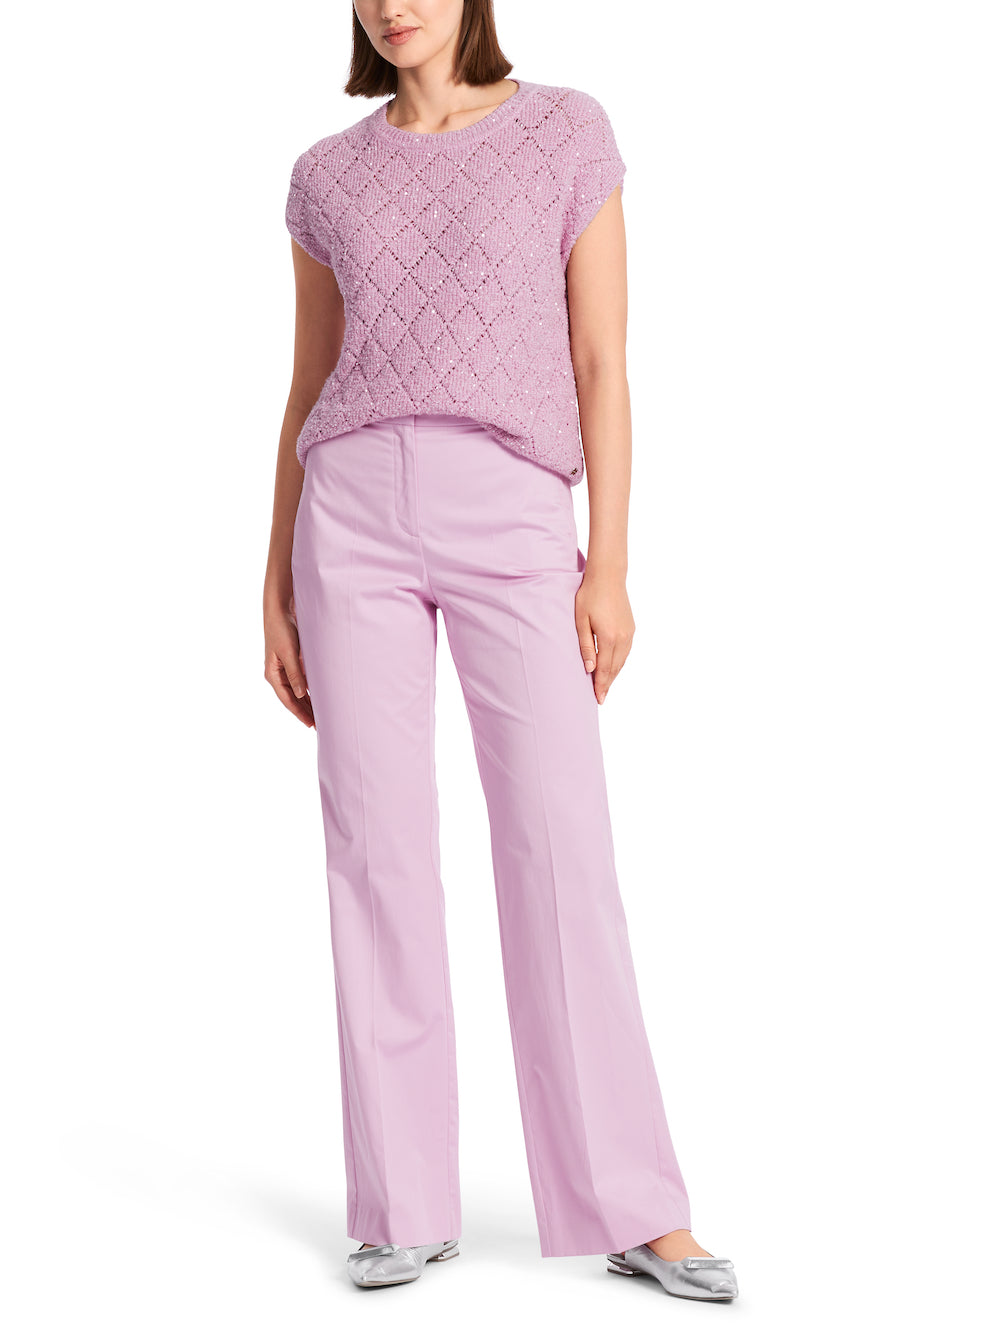 Pink Lavender Diamond Knit Sequin Sweater